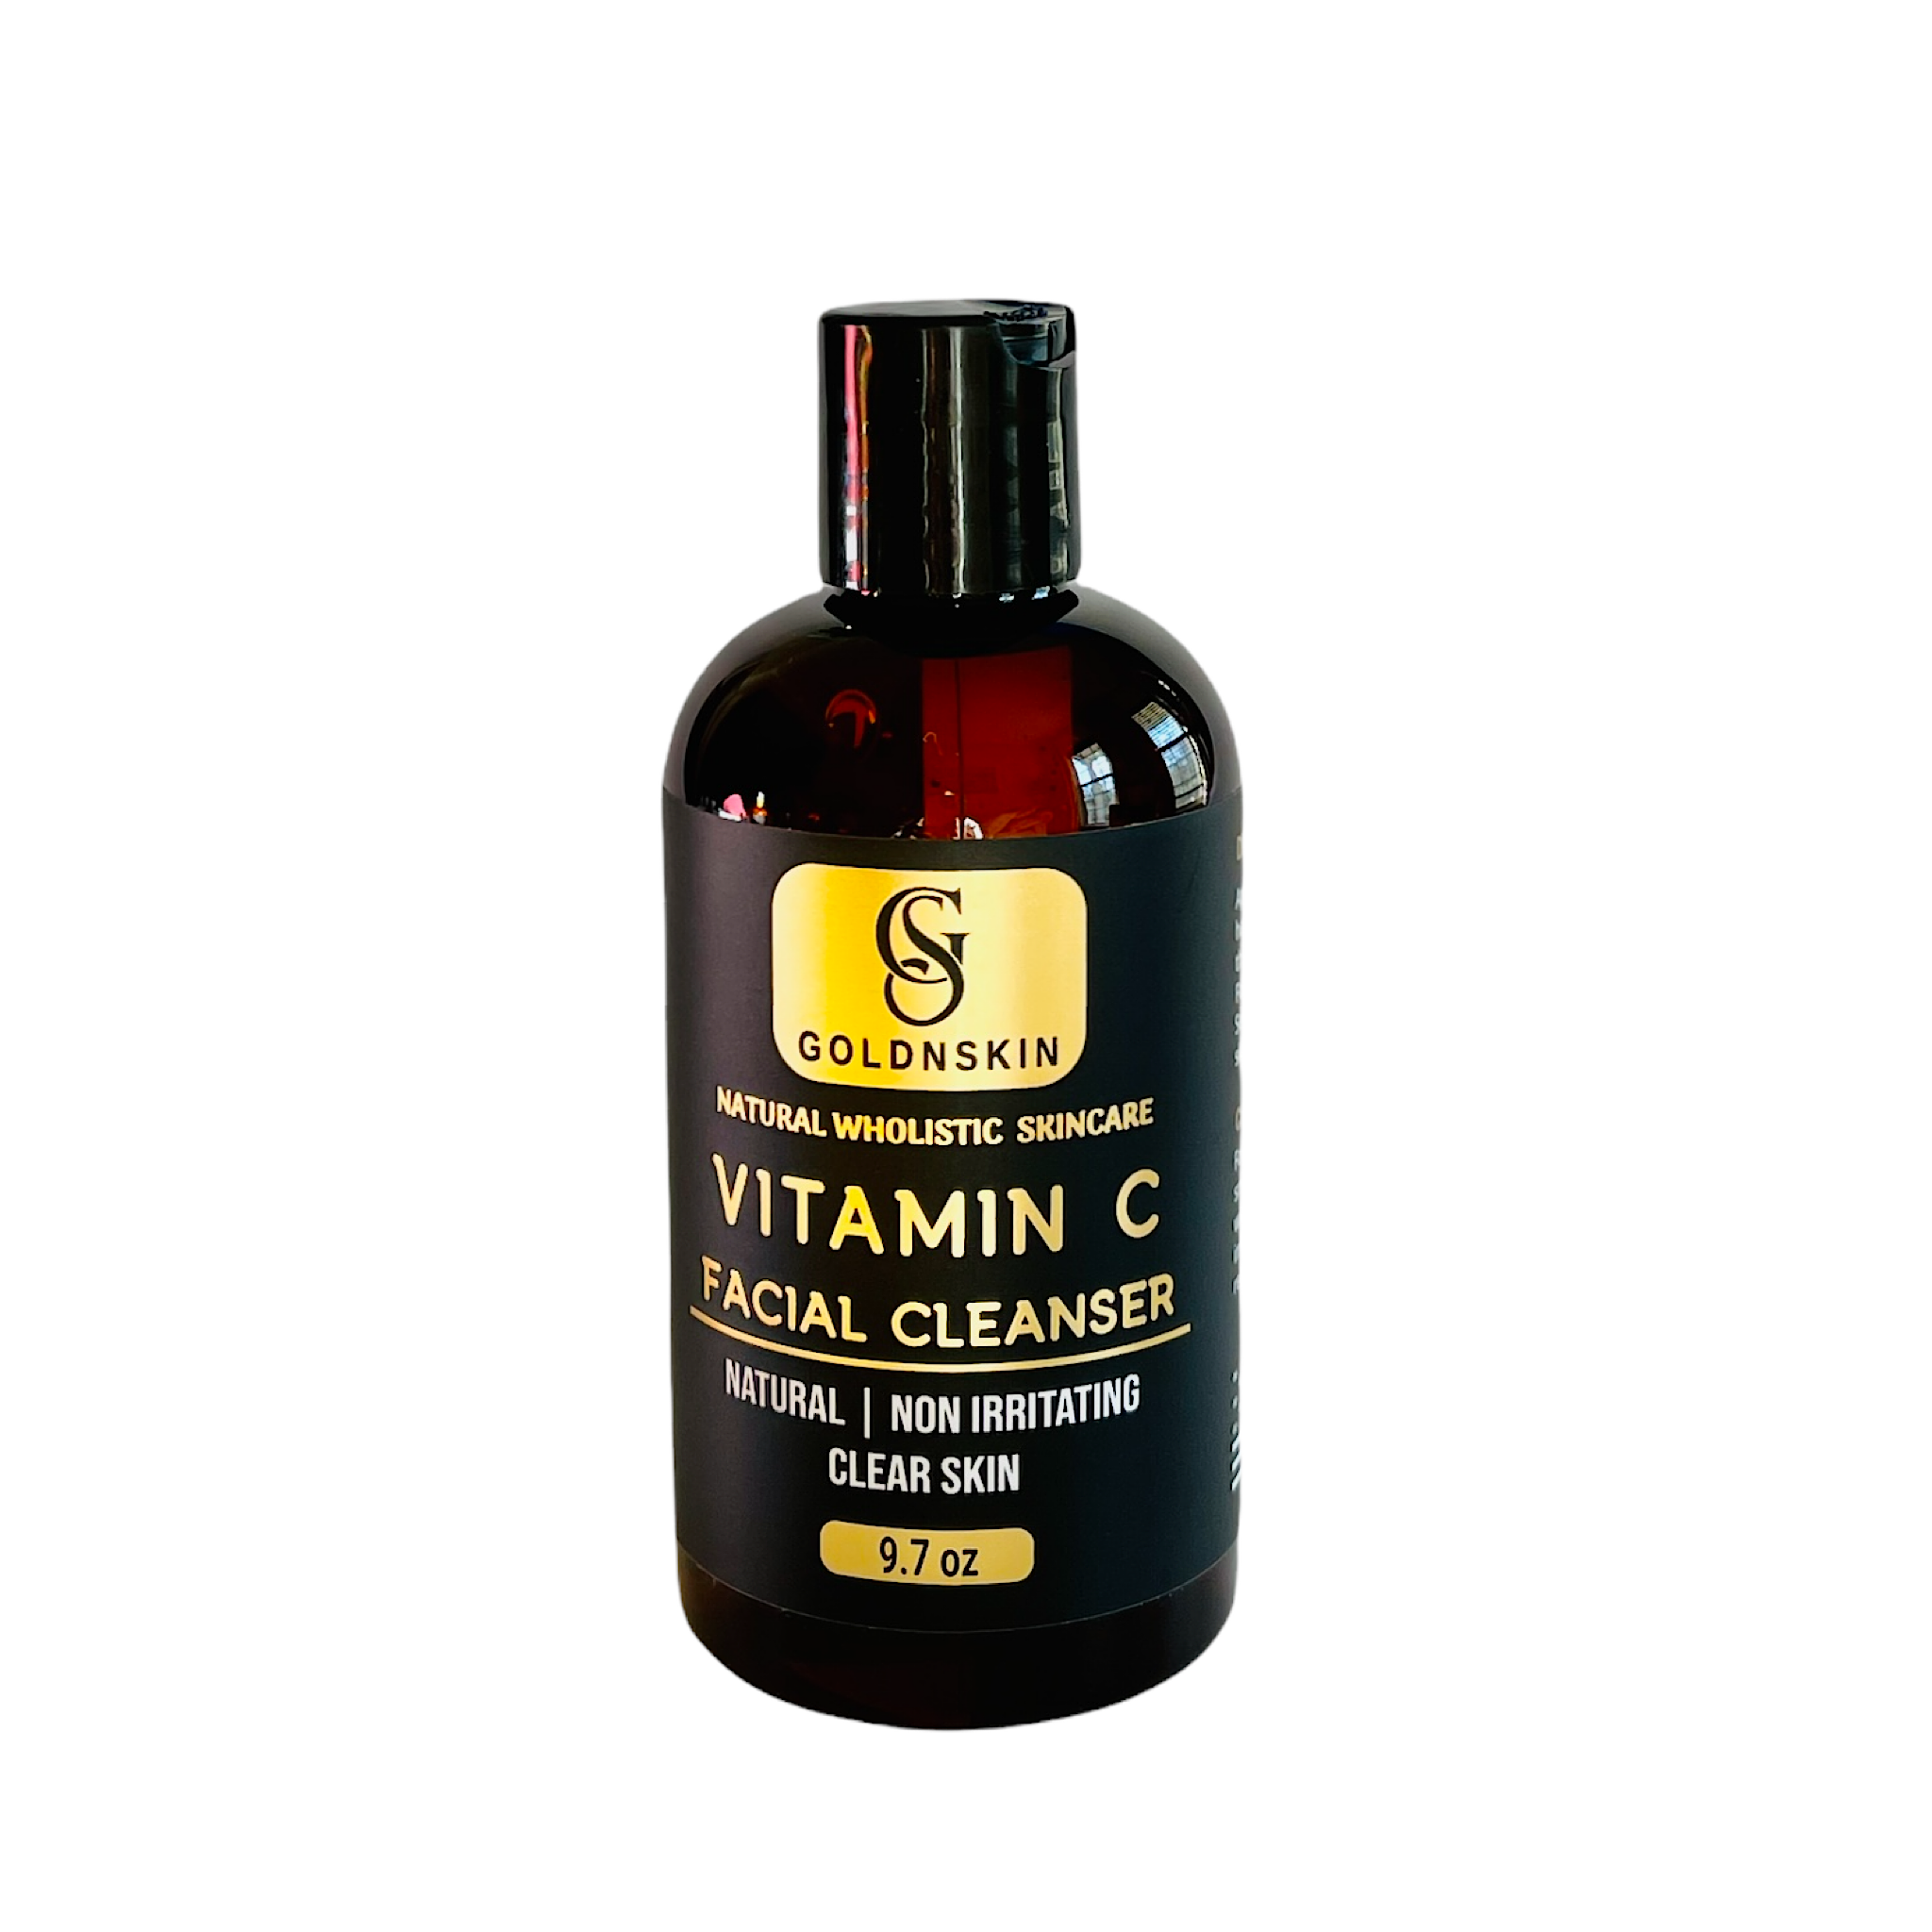 Goldnskin vitamin c facial cleanser